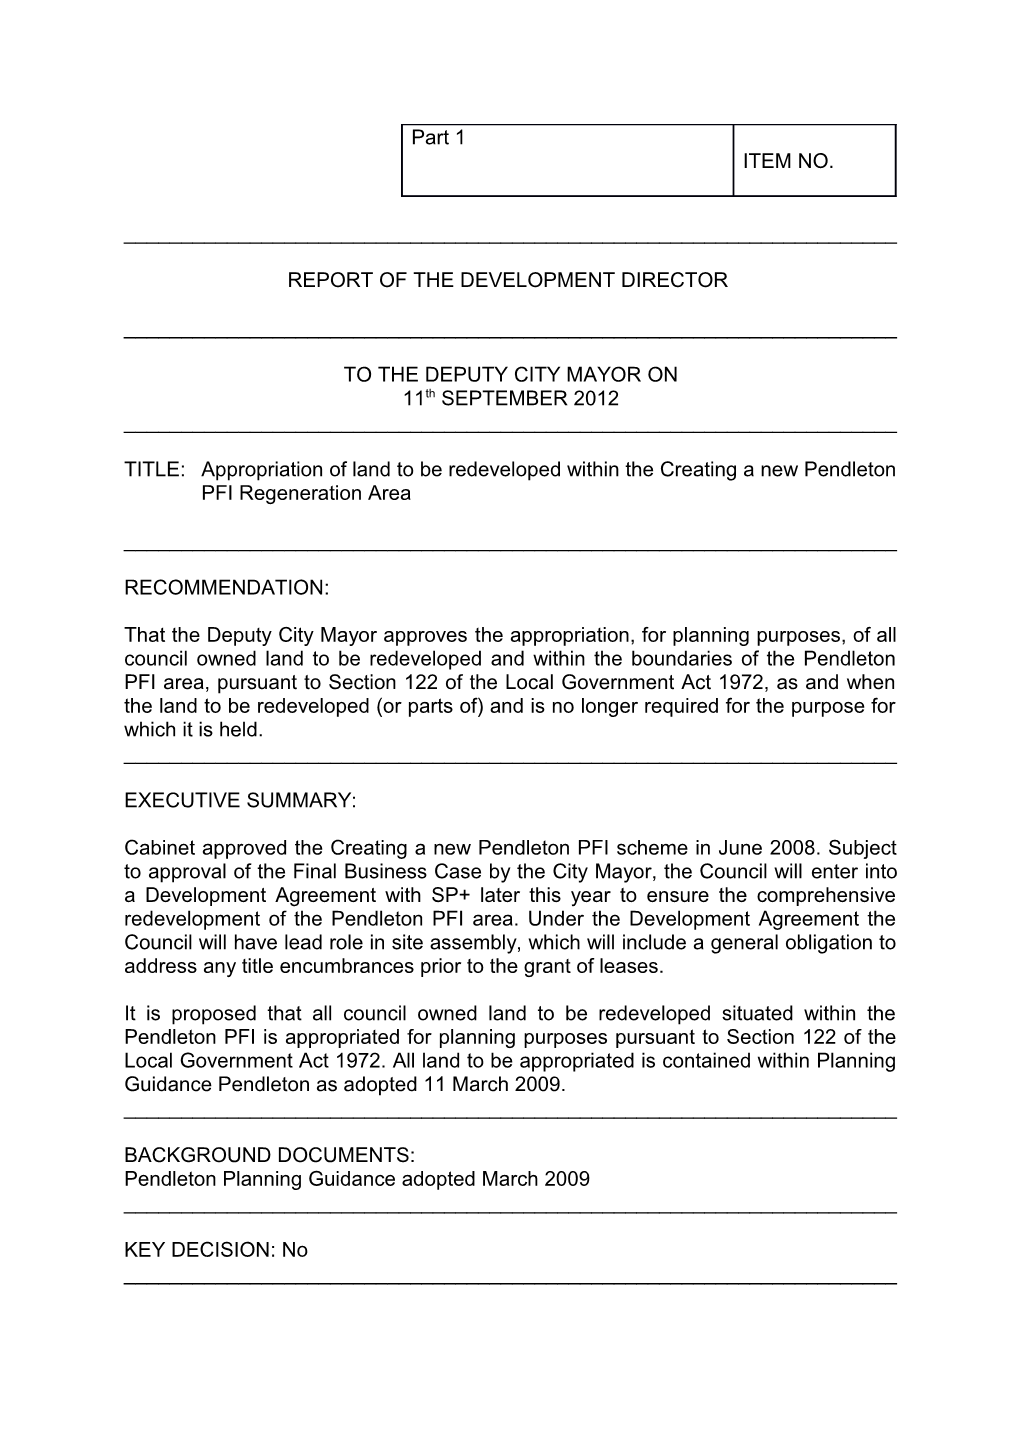 Report of the Development Director